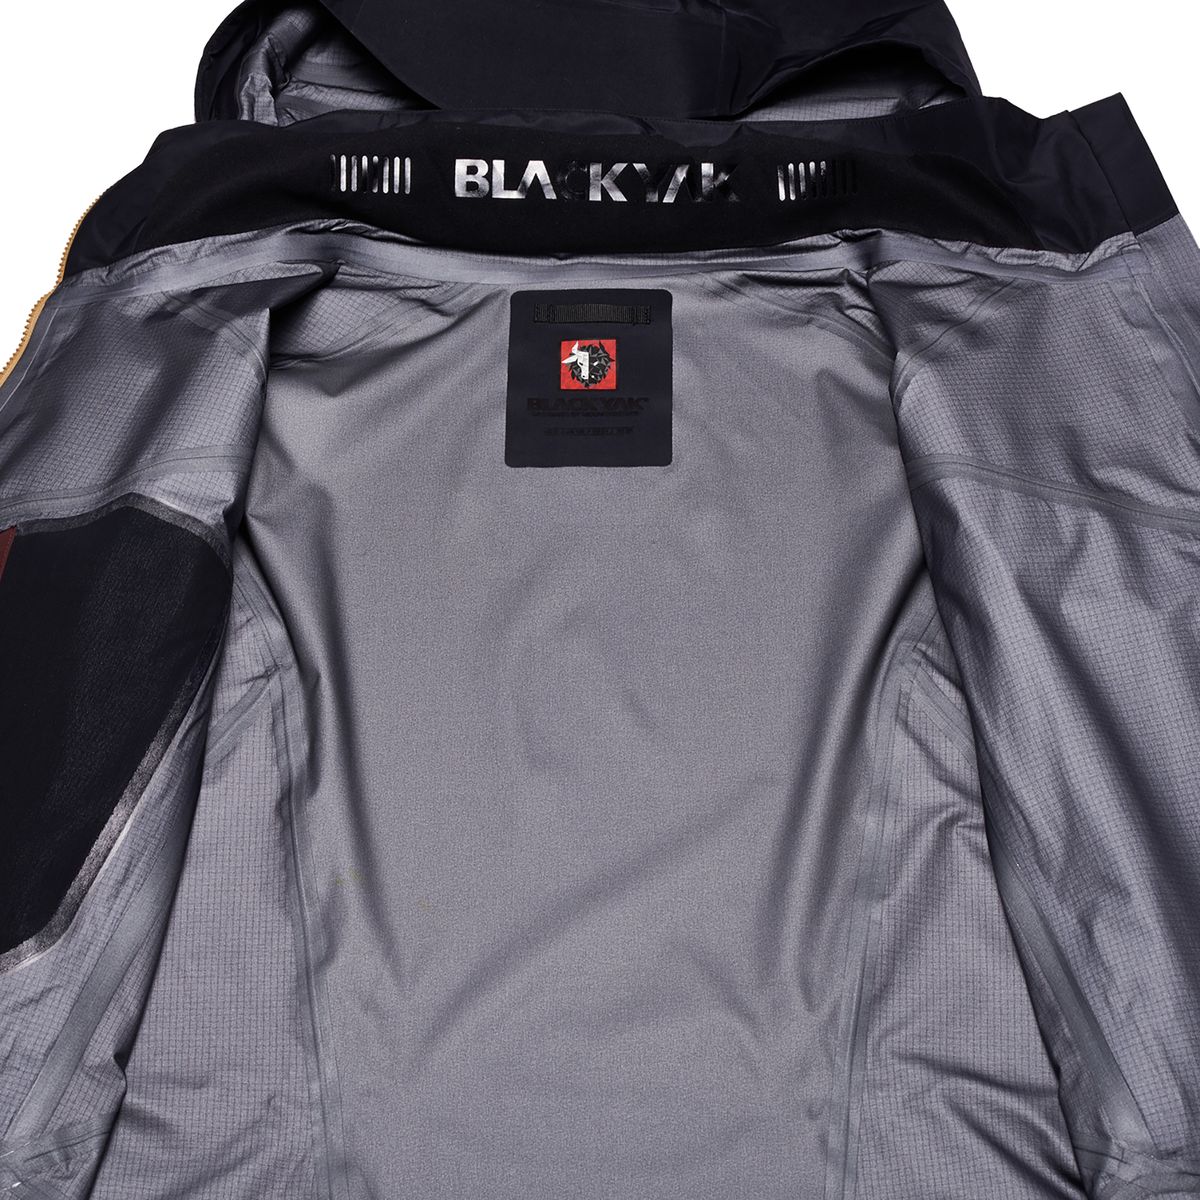 Black Yak GORE-TEX Pro Shell 3L Jacket - Chaqueta impermeable